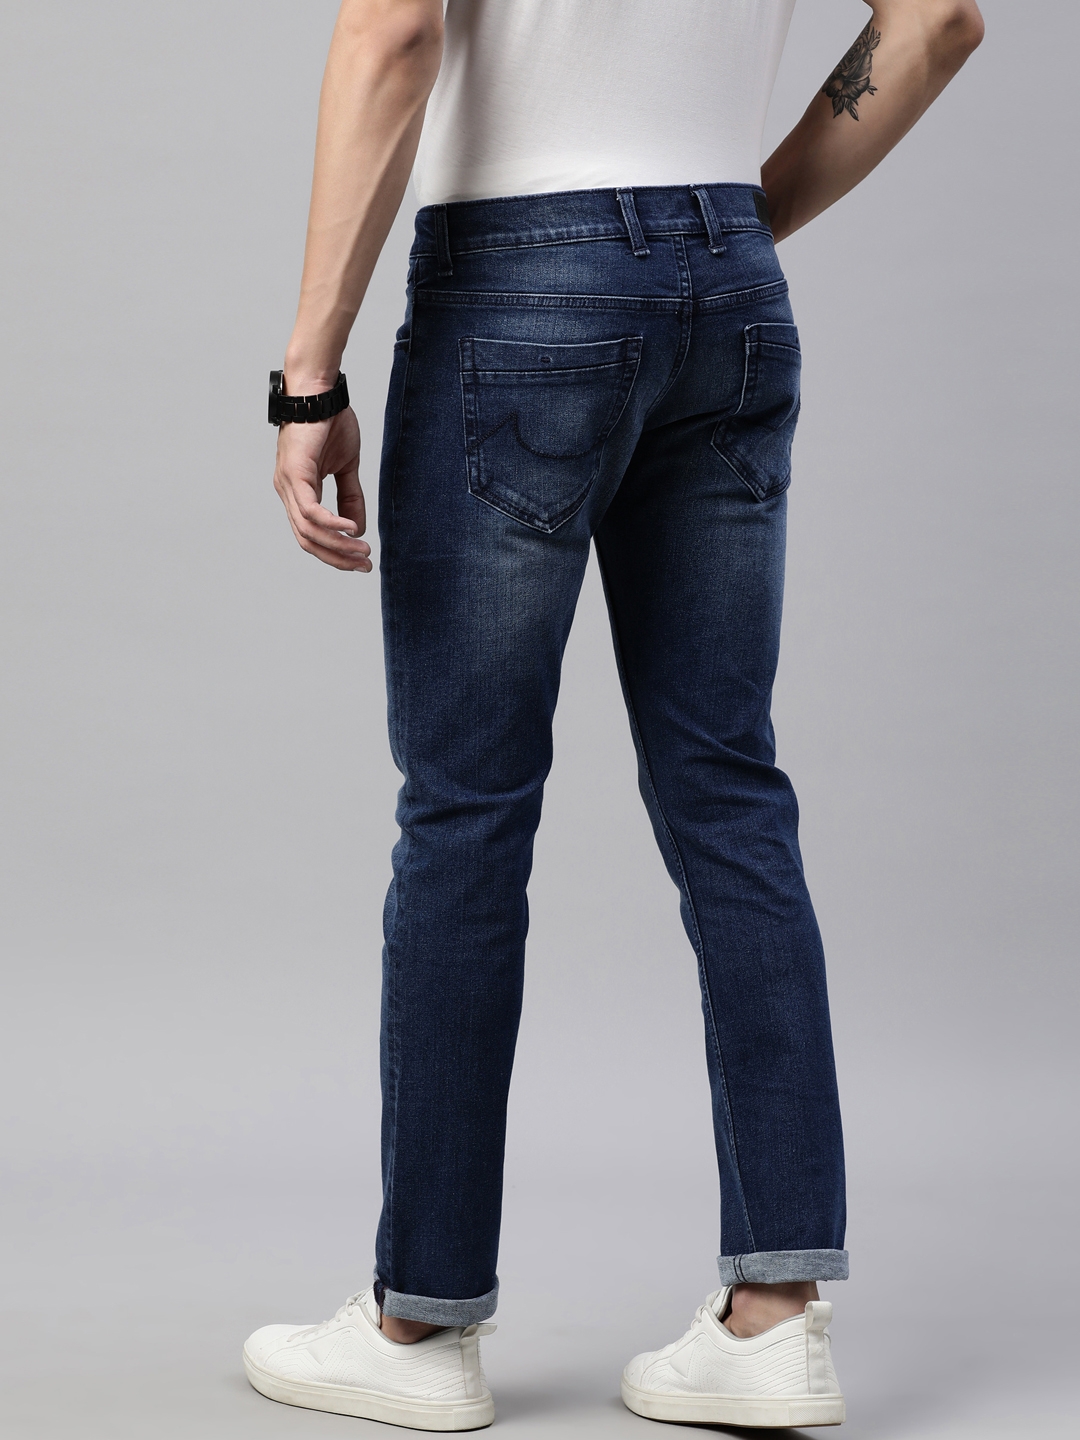 American Bull | American Bull Mens Denim Jeans With 5 Pockets 1